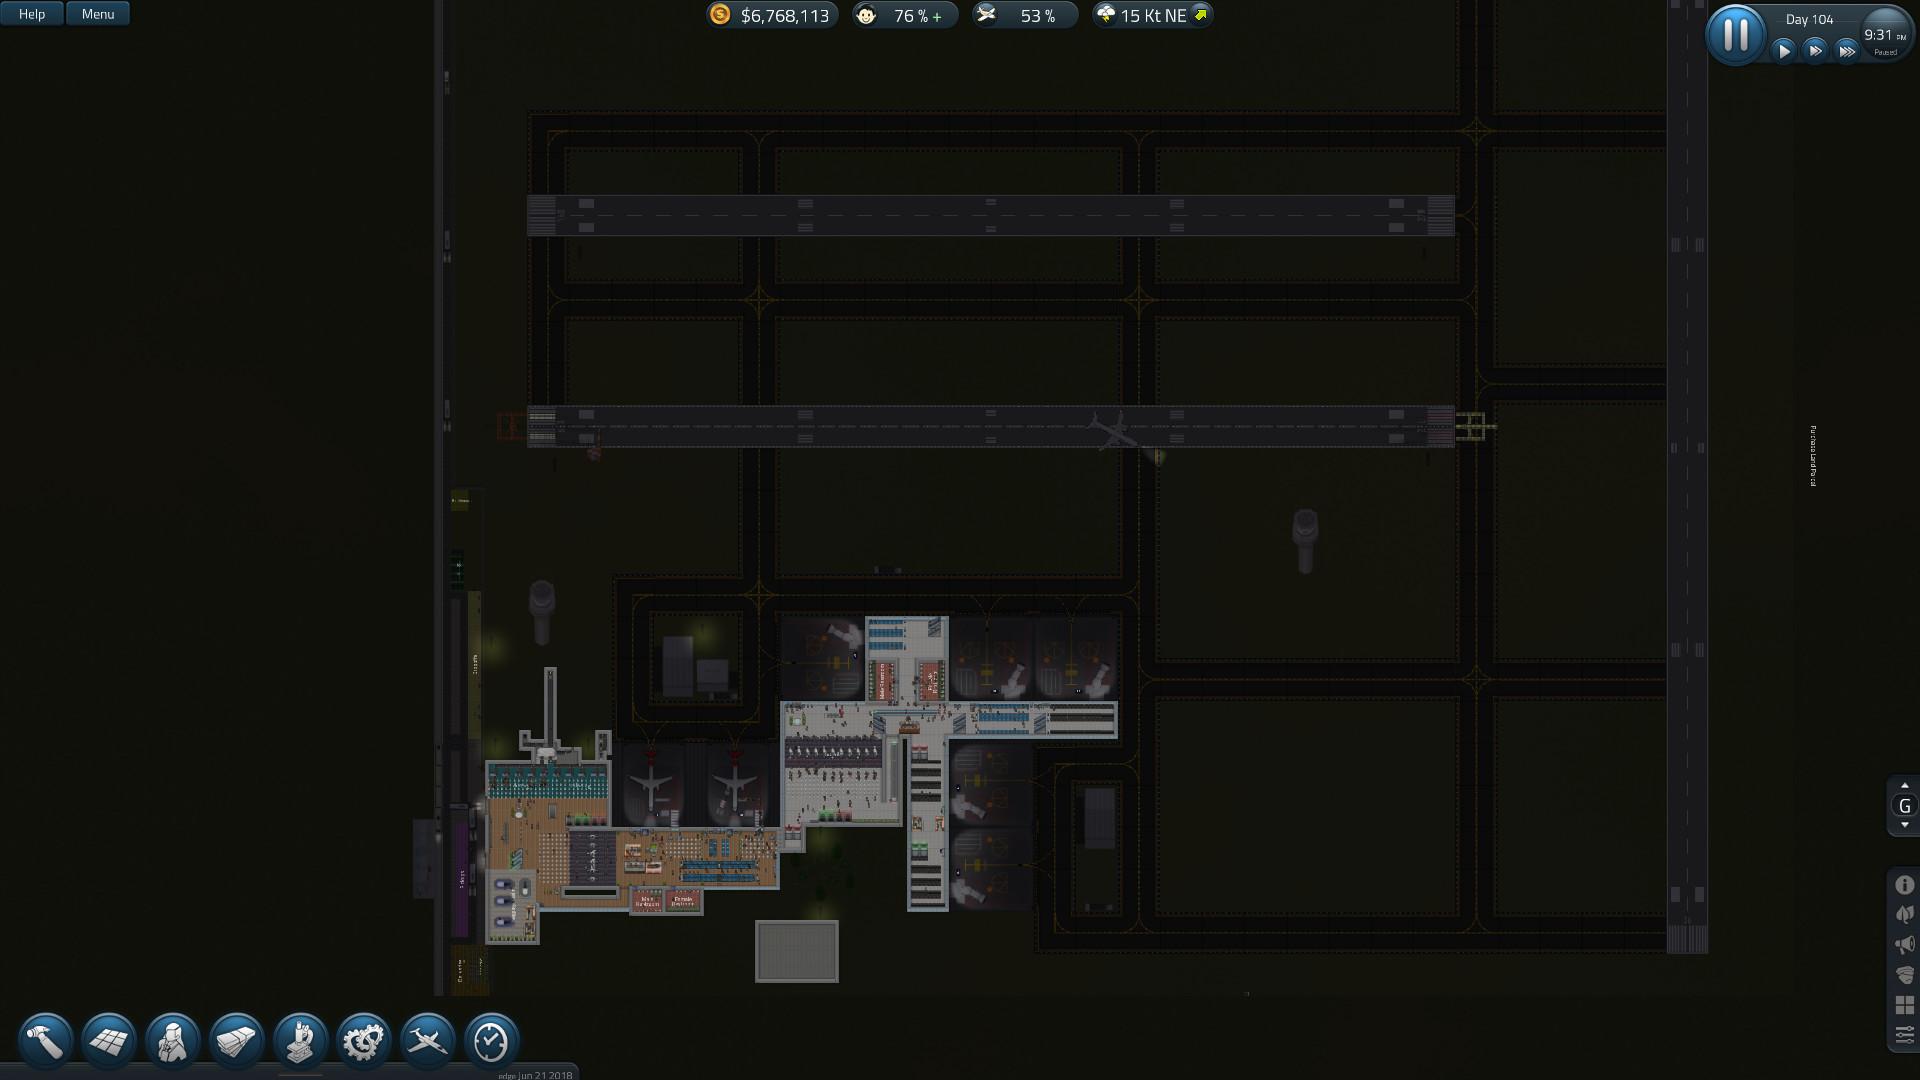 Screenshot №12 from game SimAirport